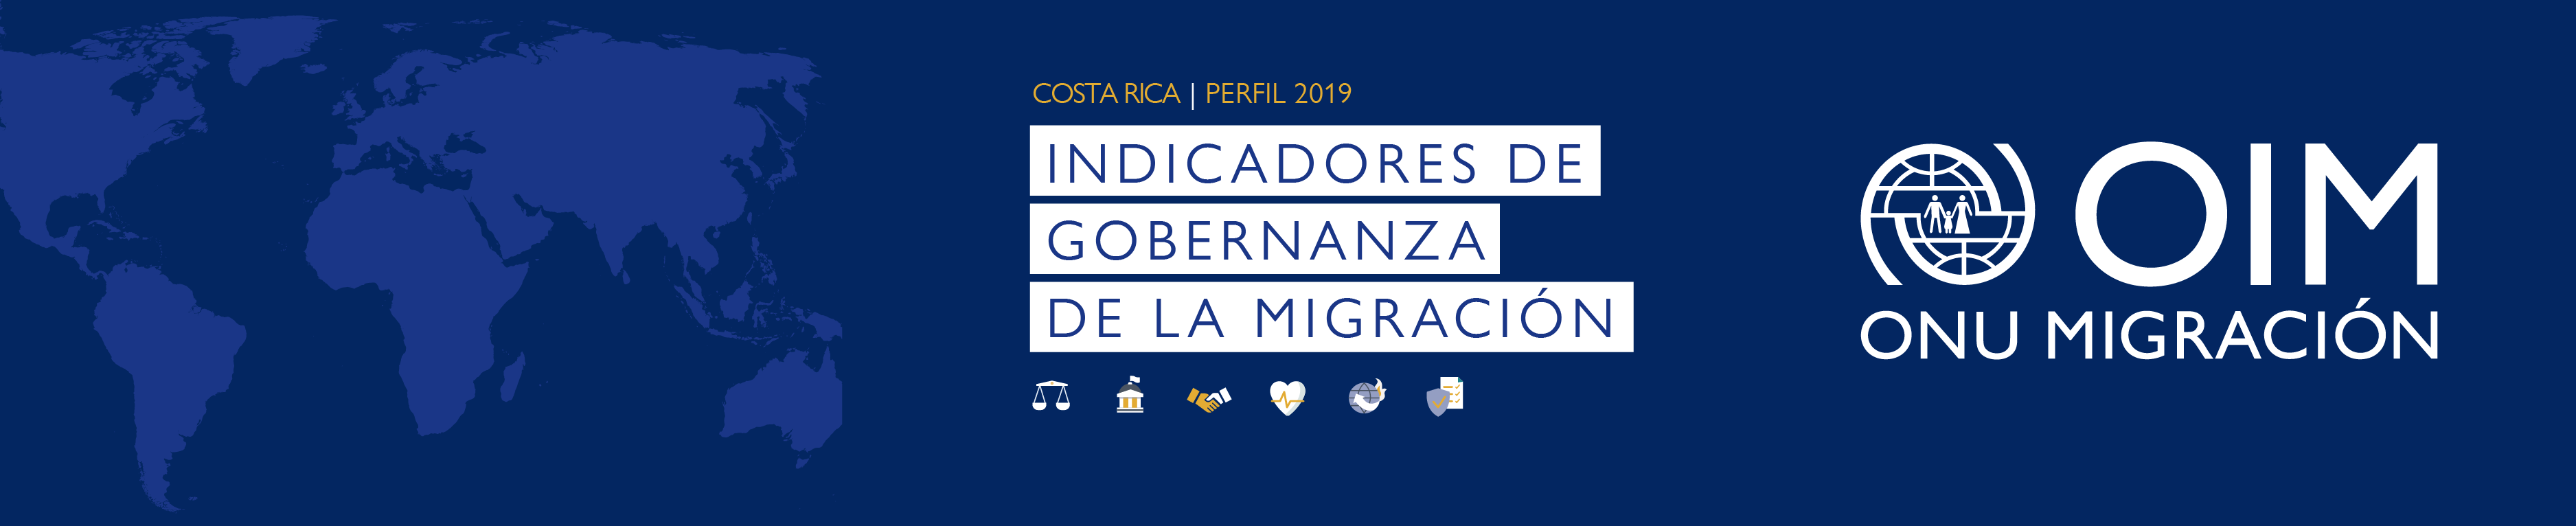 Perfil de Gobernanza sobre Migración - Costa Rica